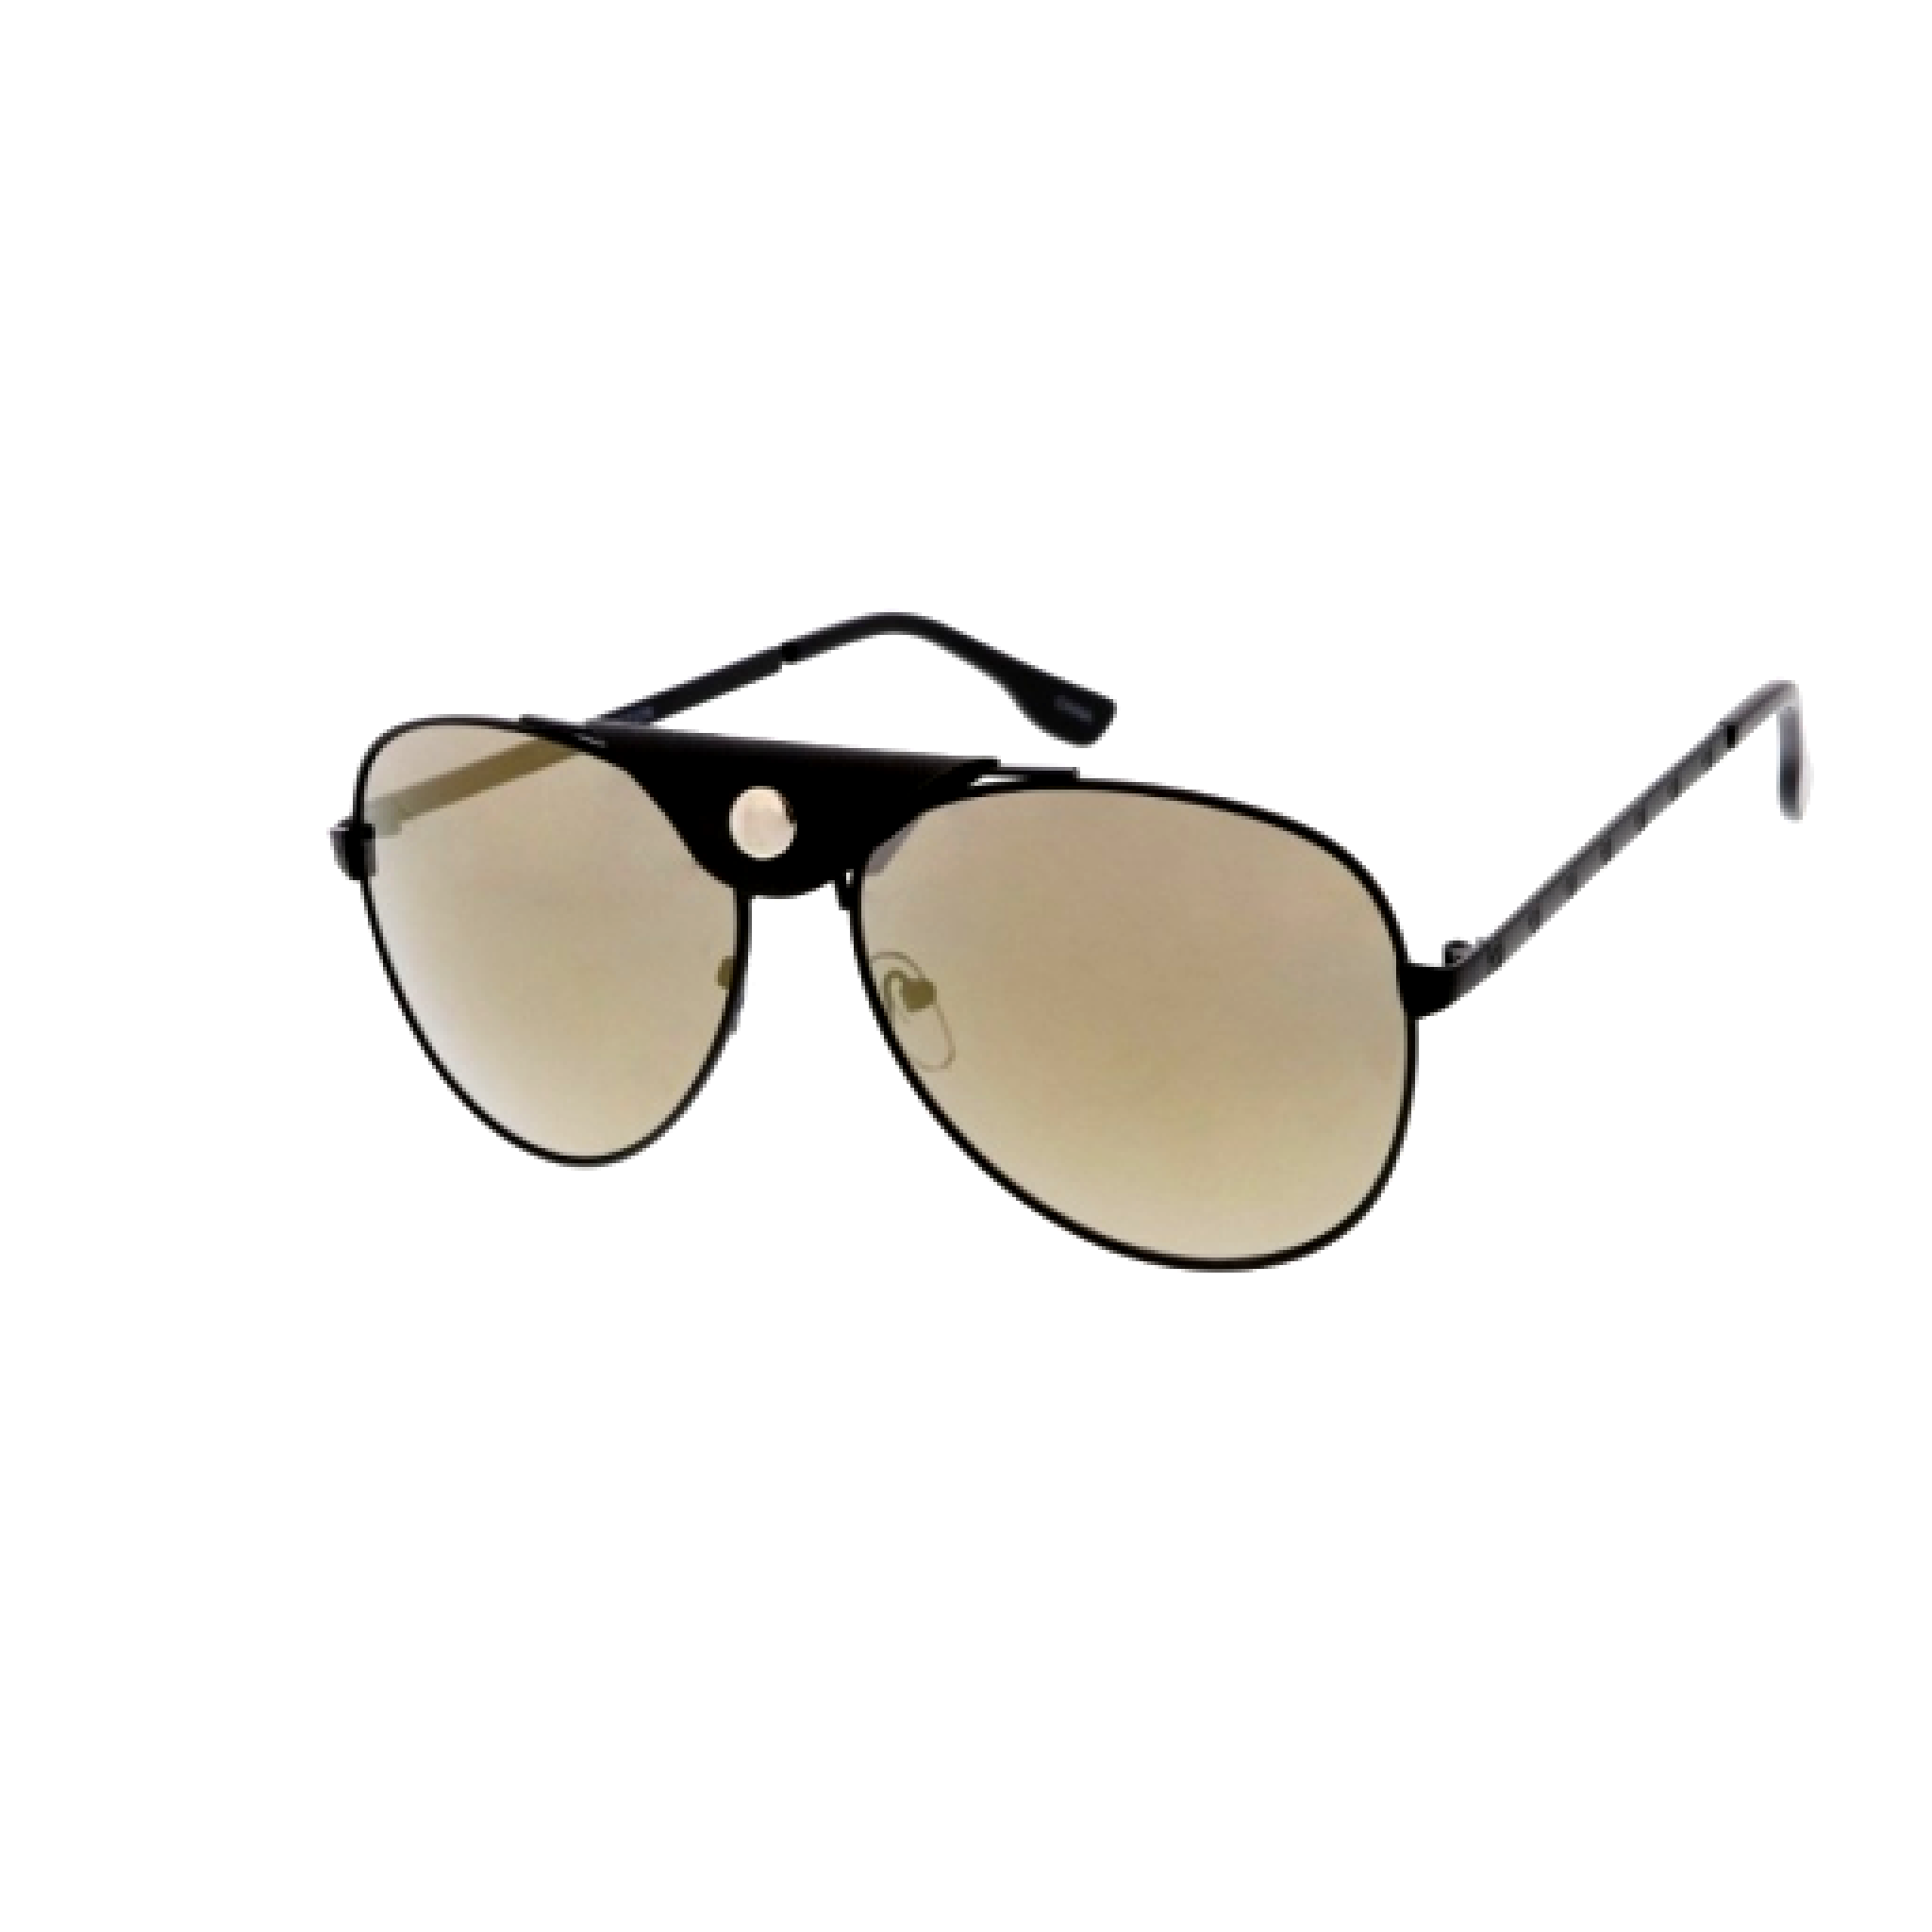 Dani Joh Louie Aviator Sunglasses